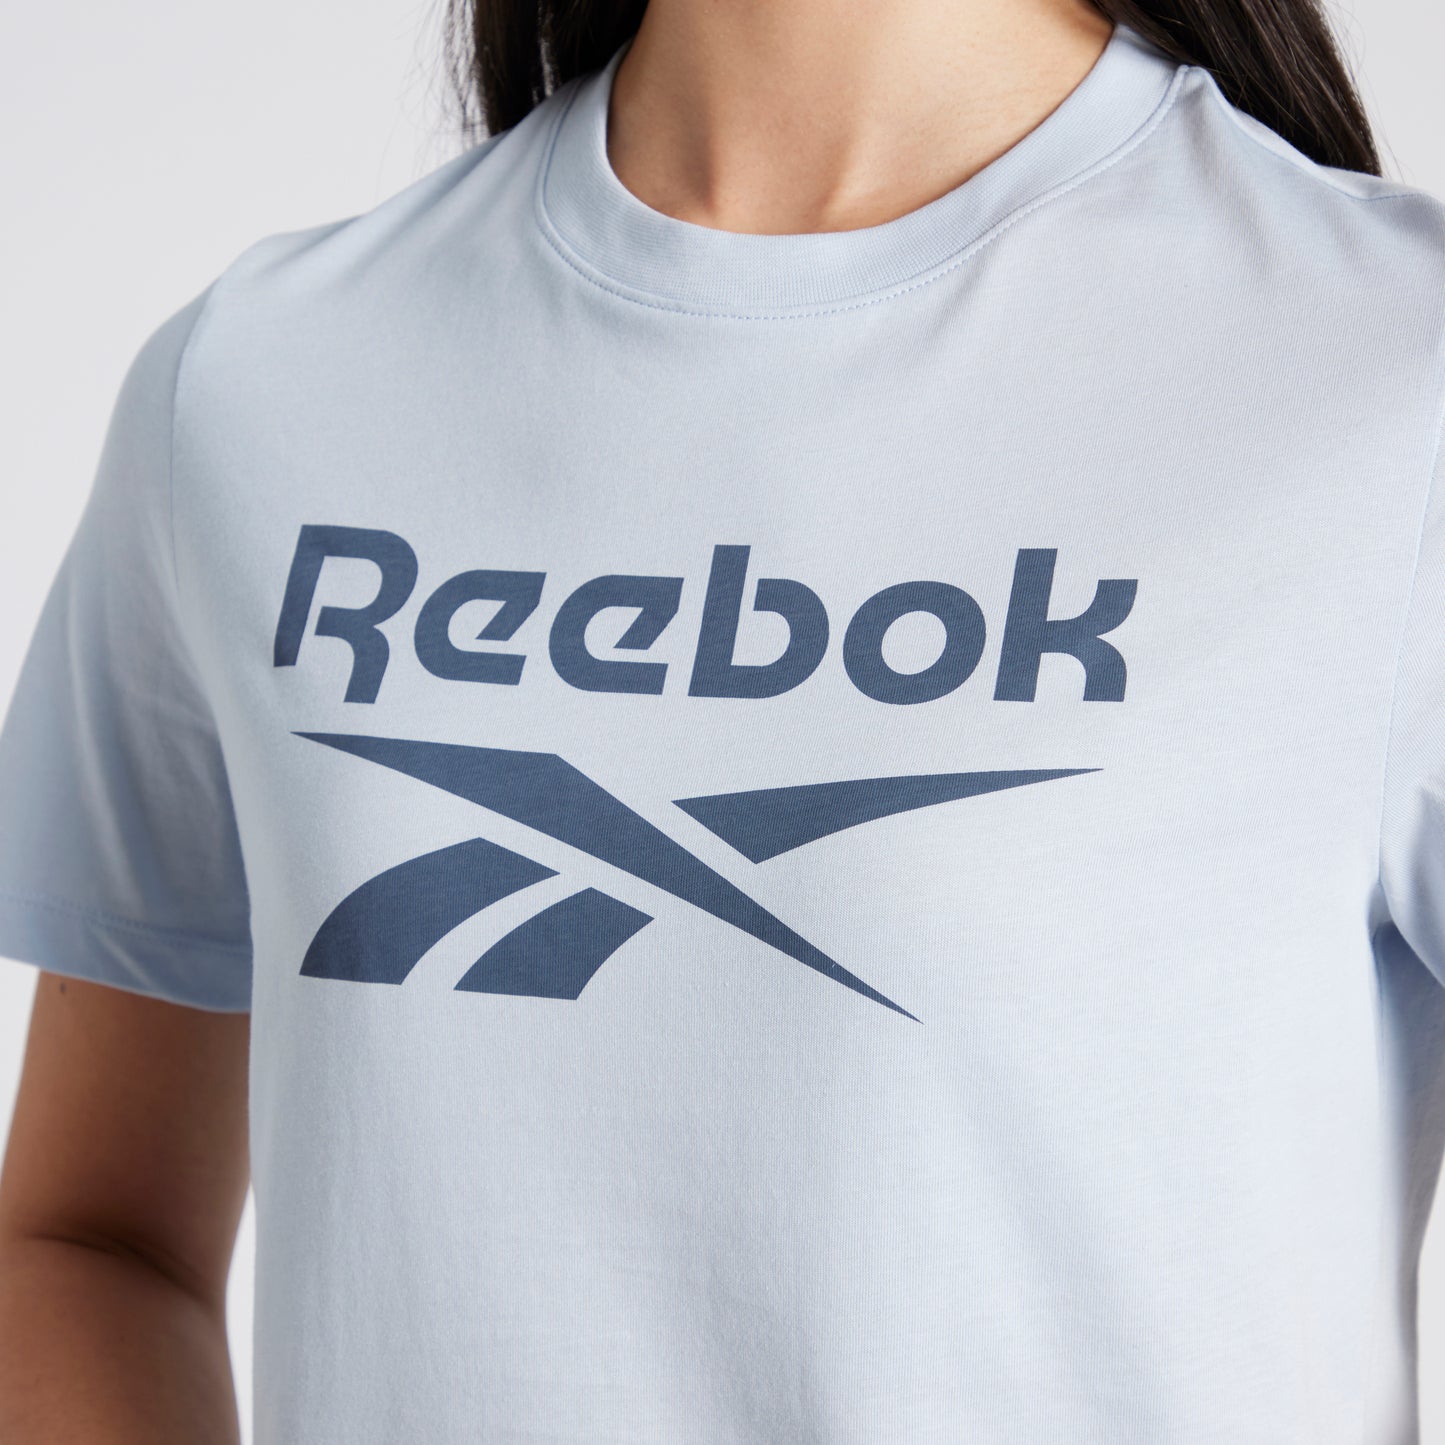 Reebok Id T-Shirt Pale Blue